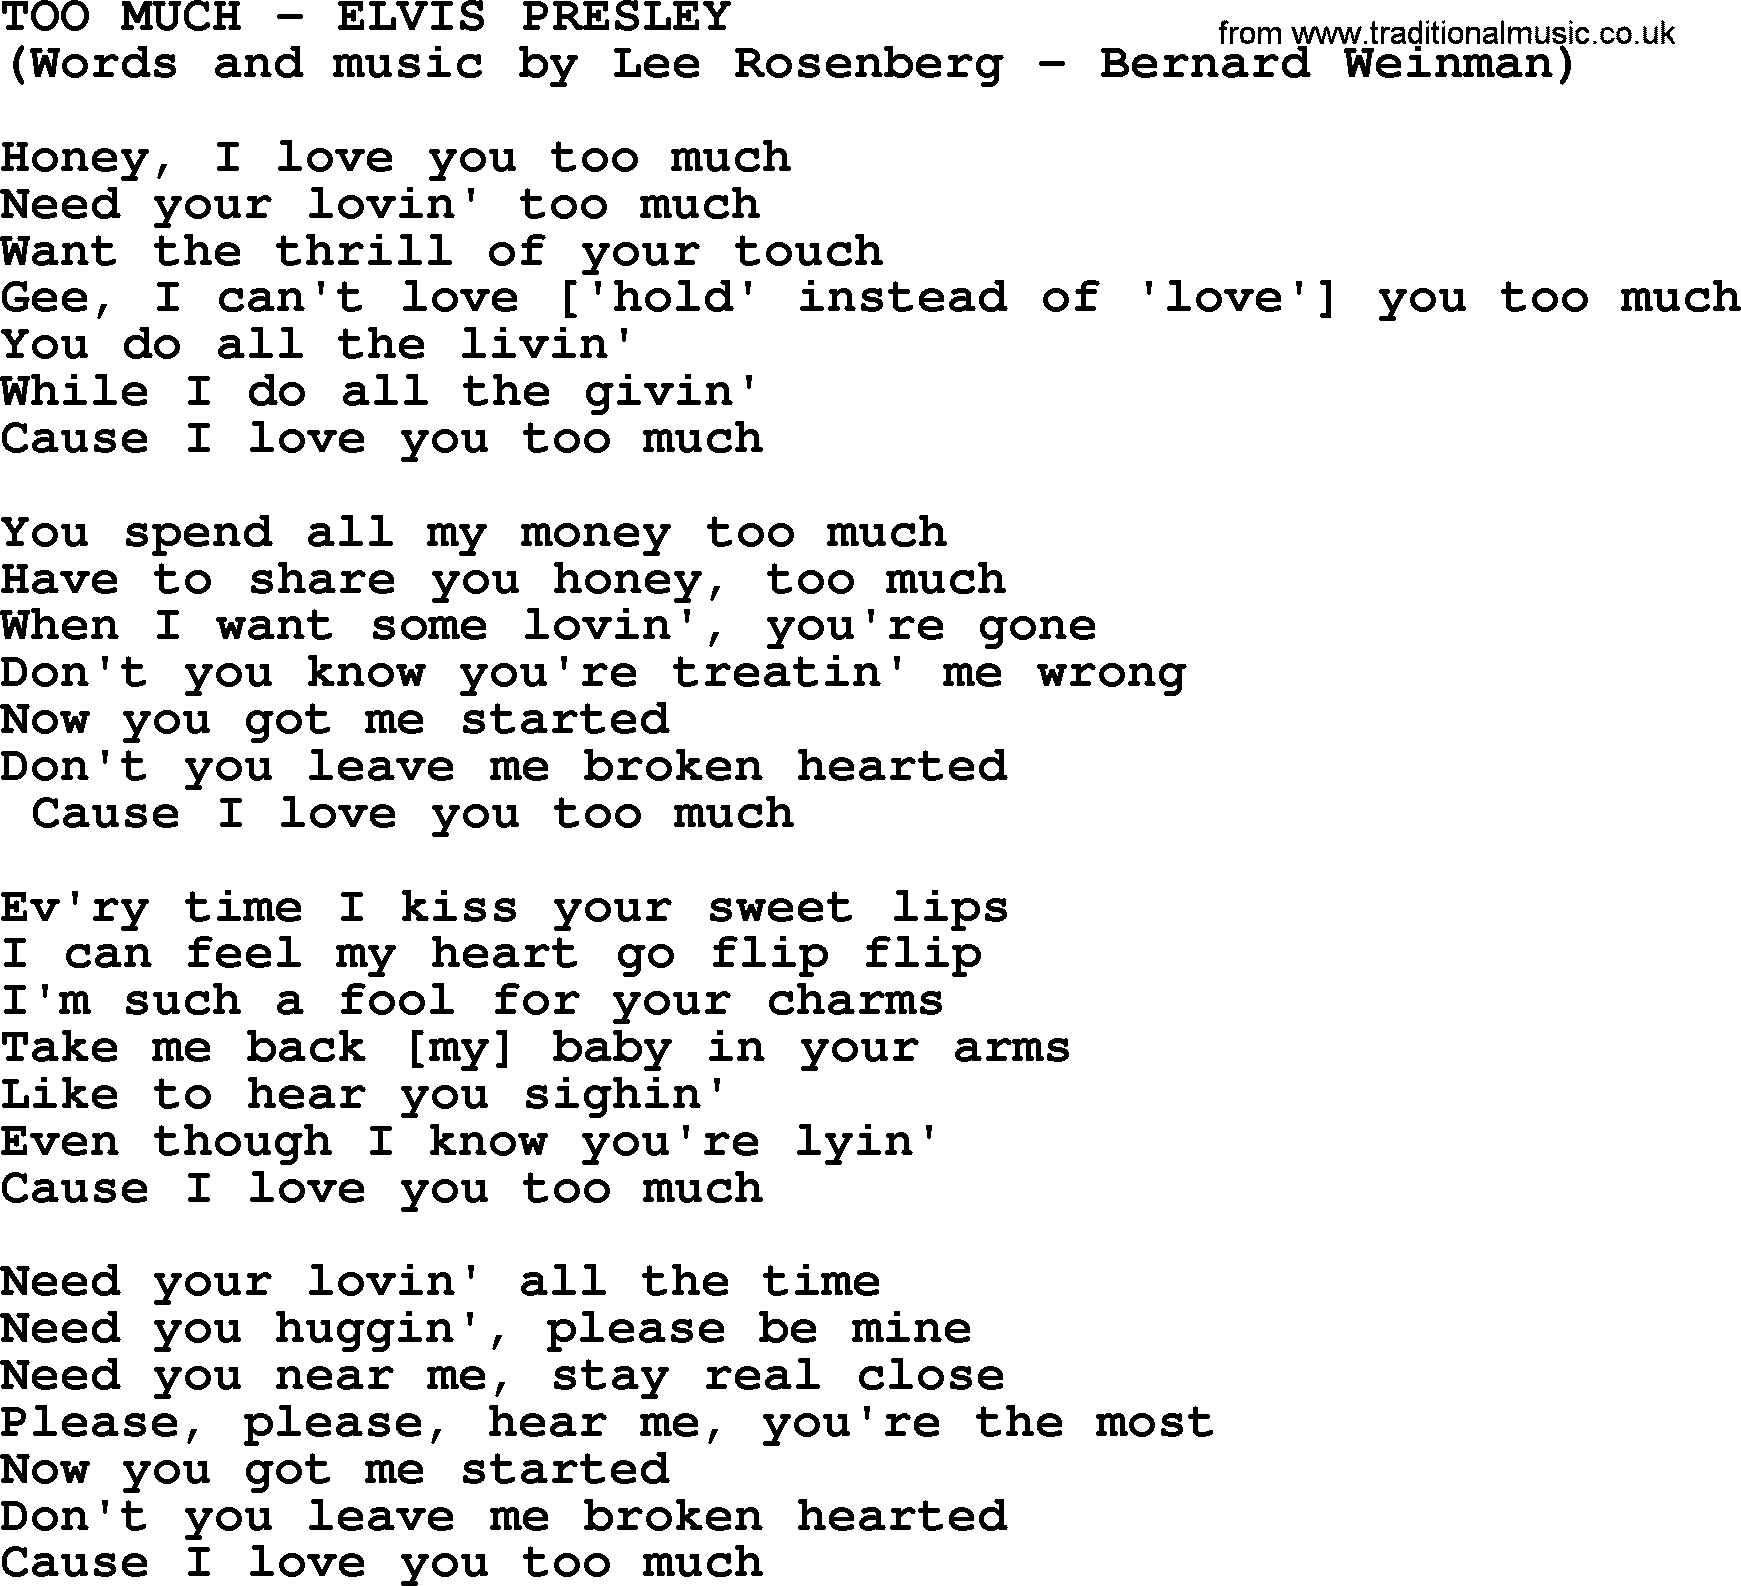 Elvis Presley song: Too Much lyrics